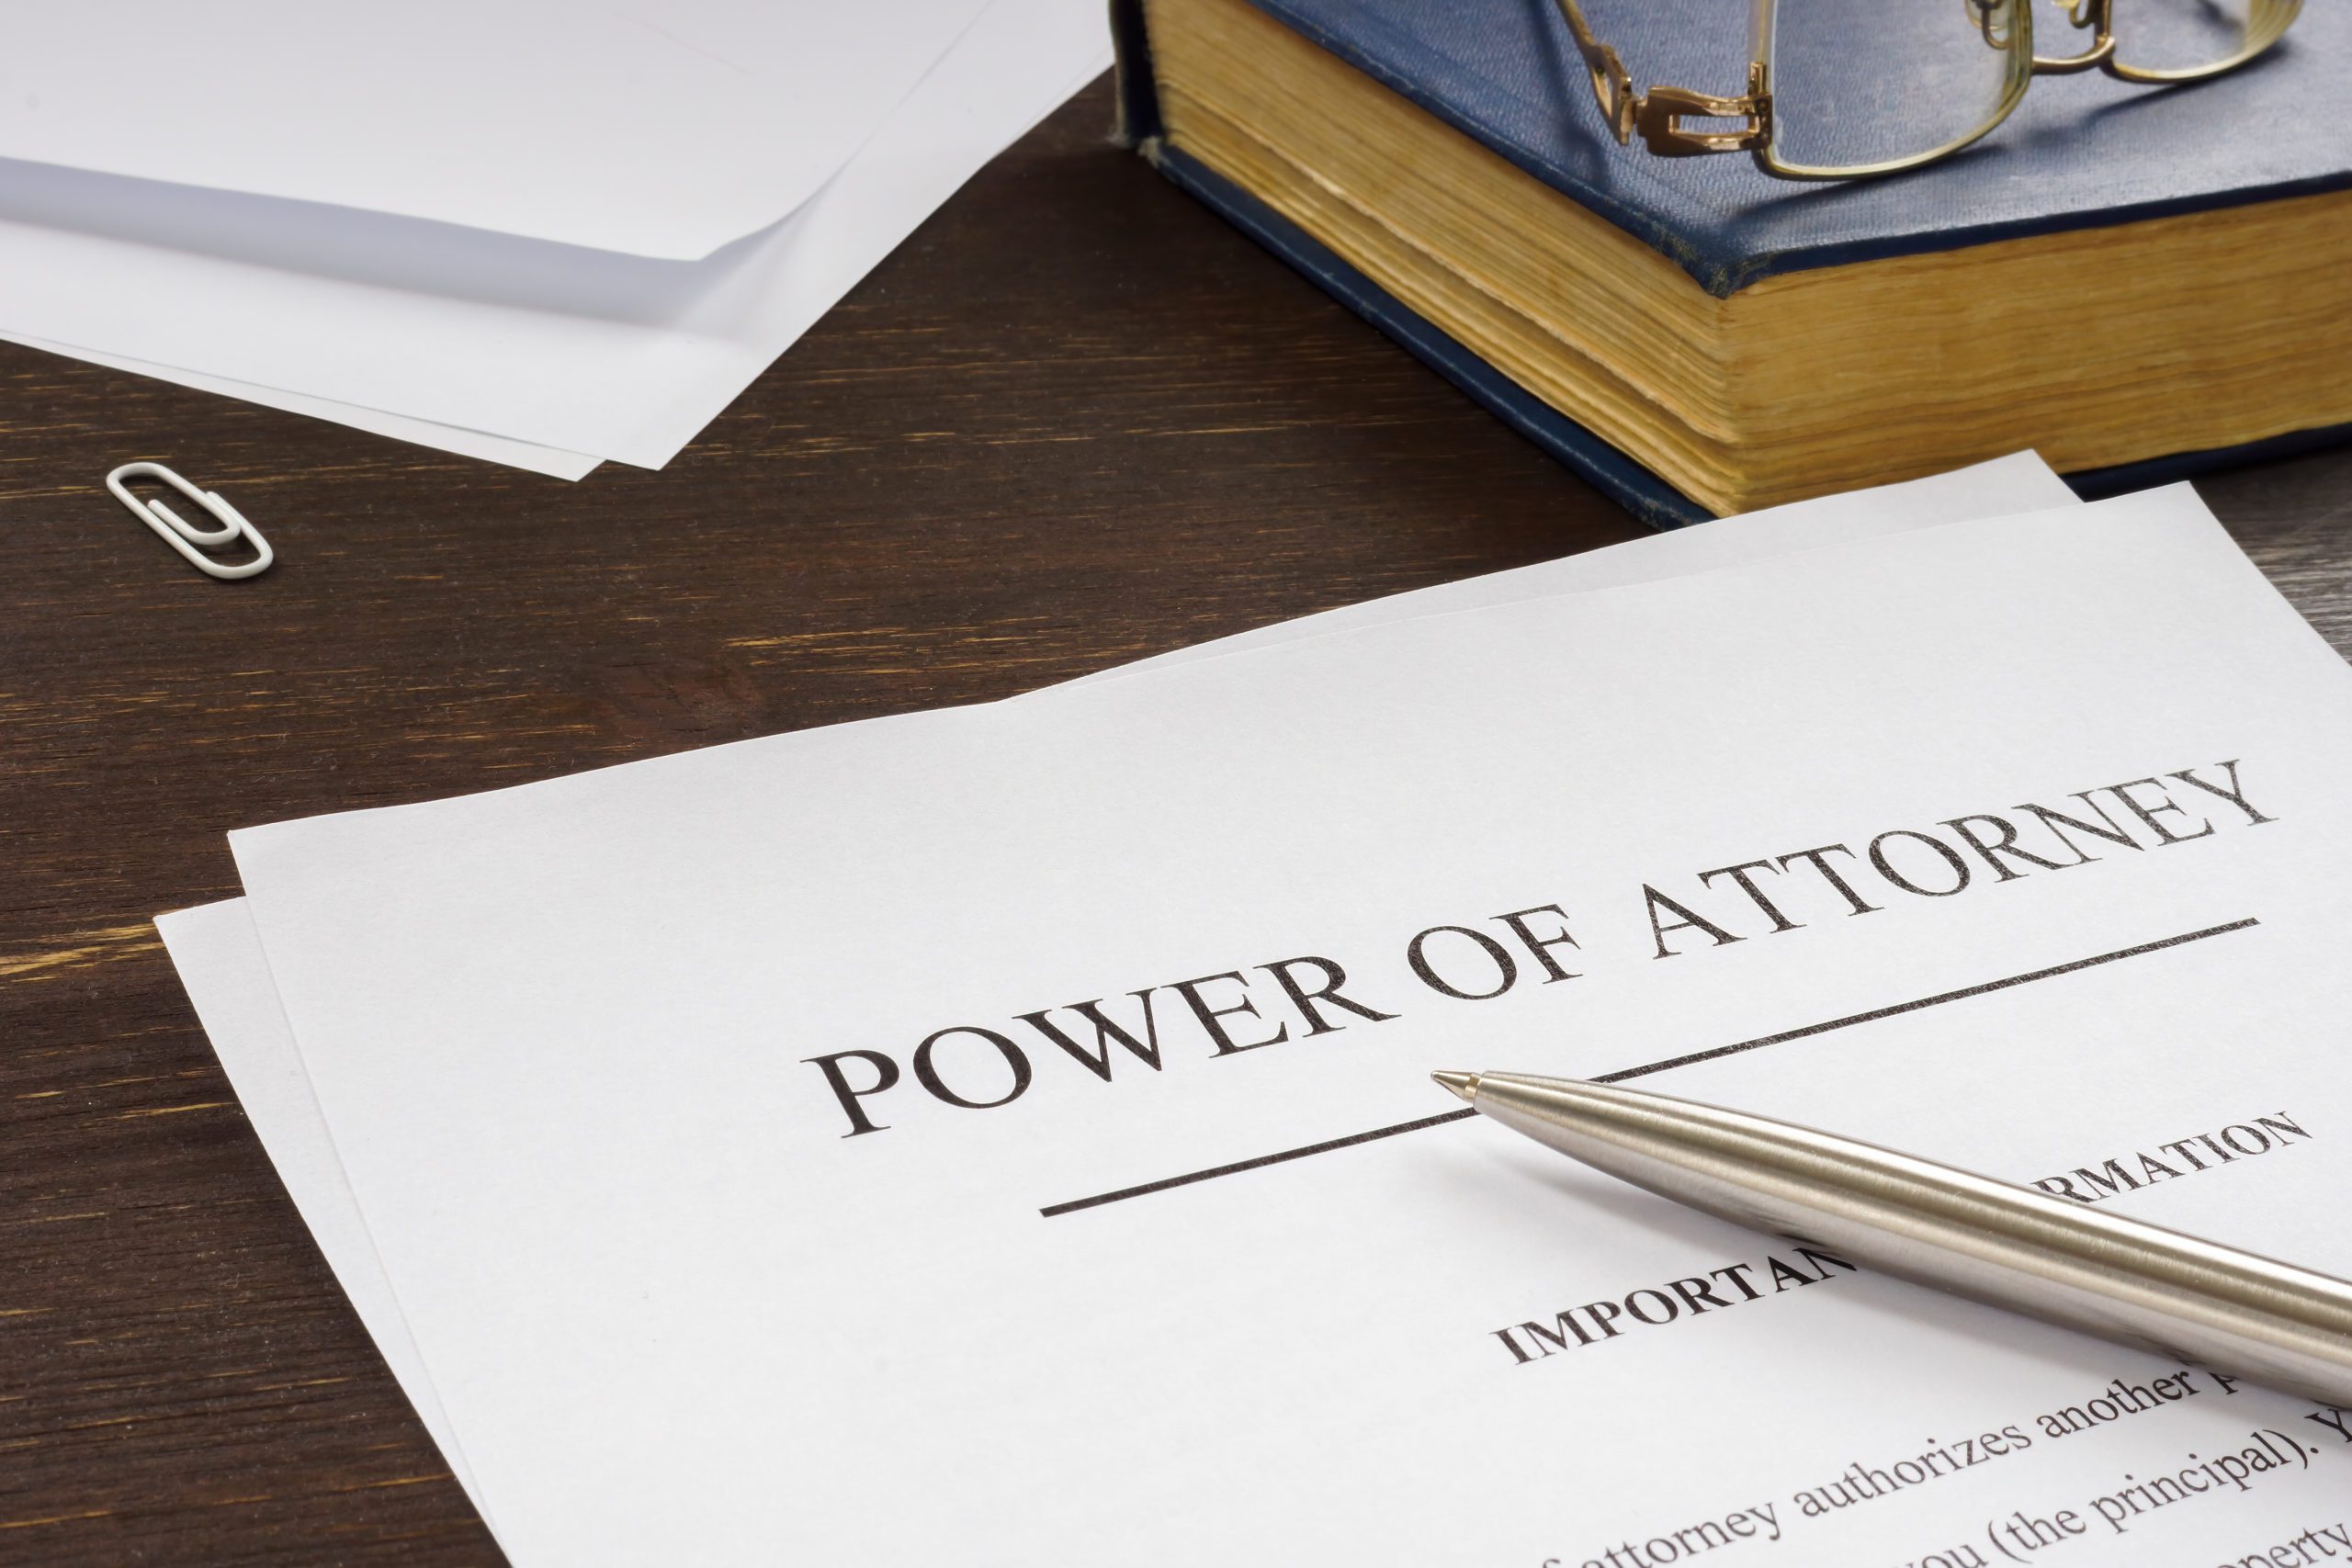 Power of Attorney (POA) Document